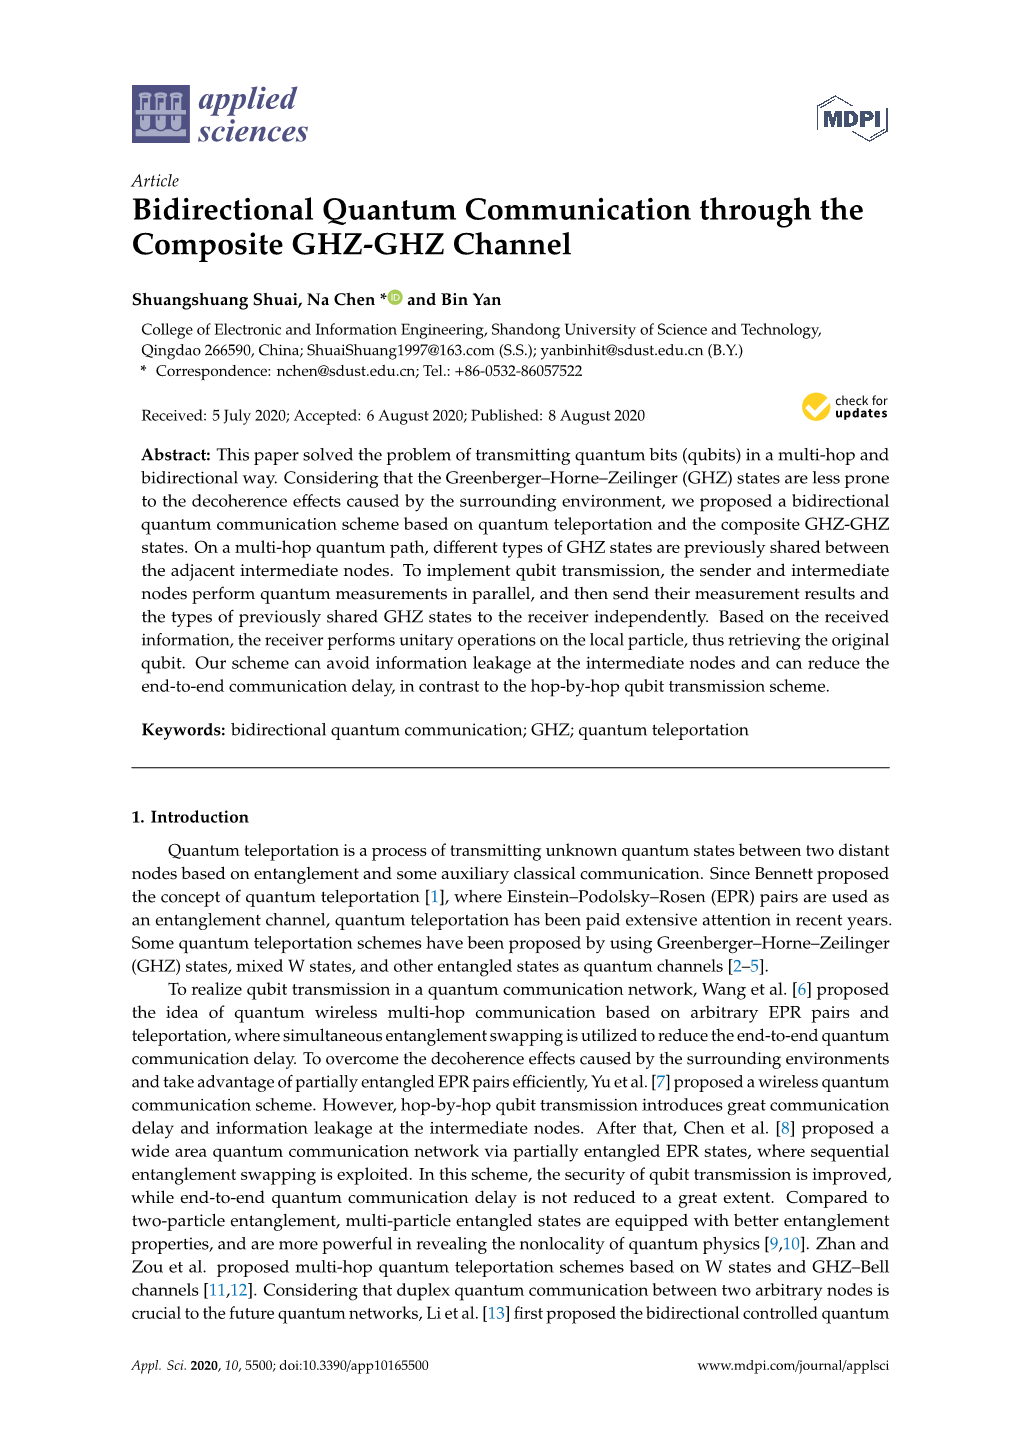 Bidirectional Quantum Communication Through the Composite GHZ-GHZ Channel